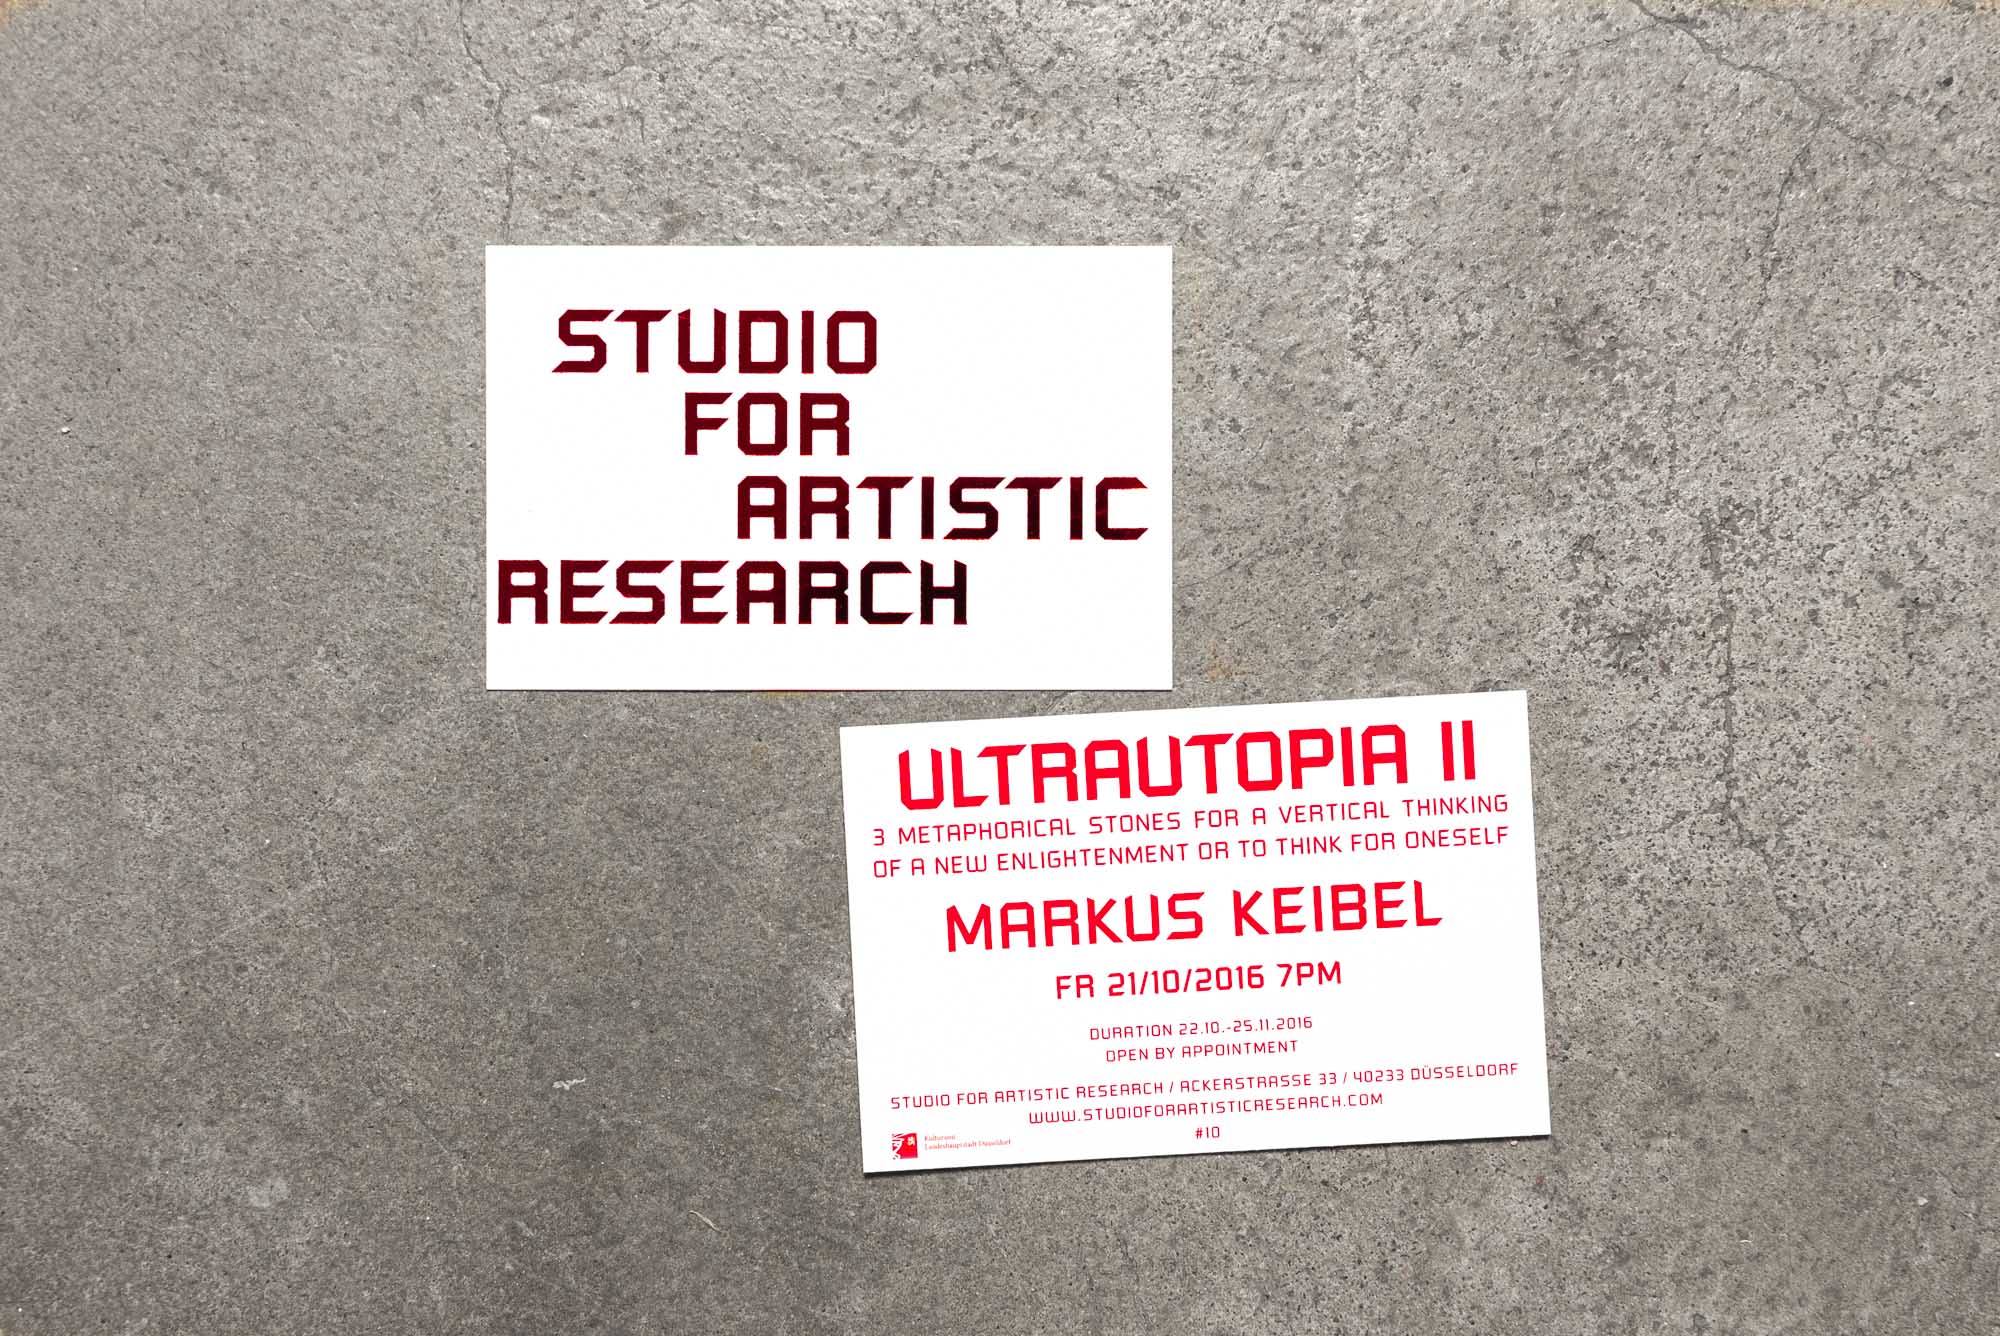 ULTRAUTOPIA 2 - Markus Keibel - Invitation Studio For Artistic Research Markus Keibel Düsseldorf